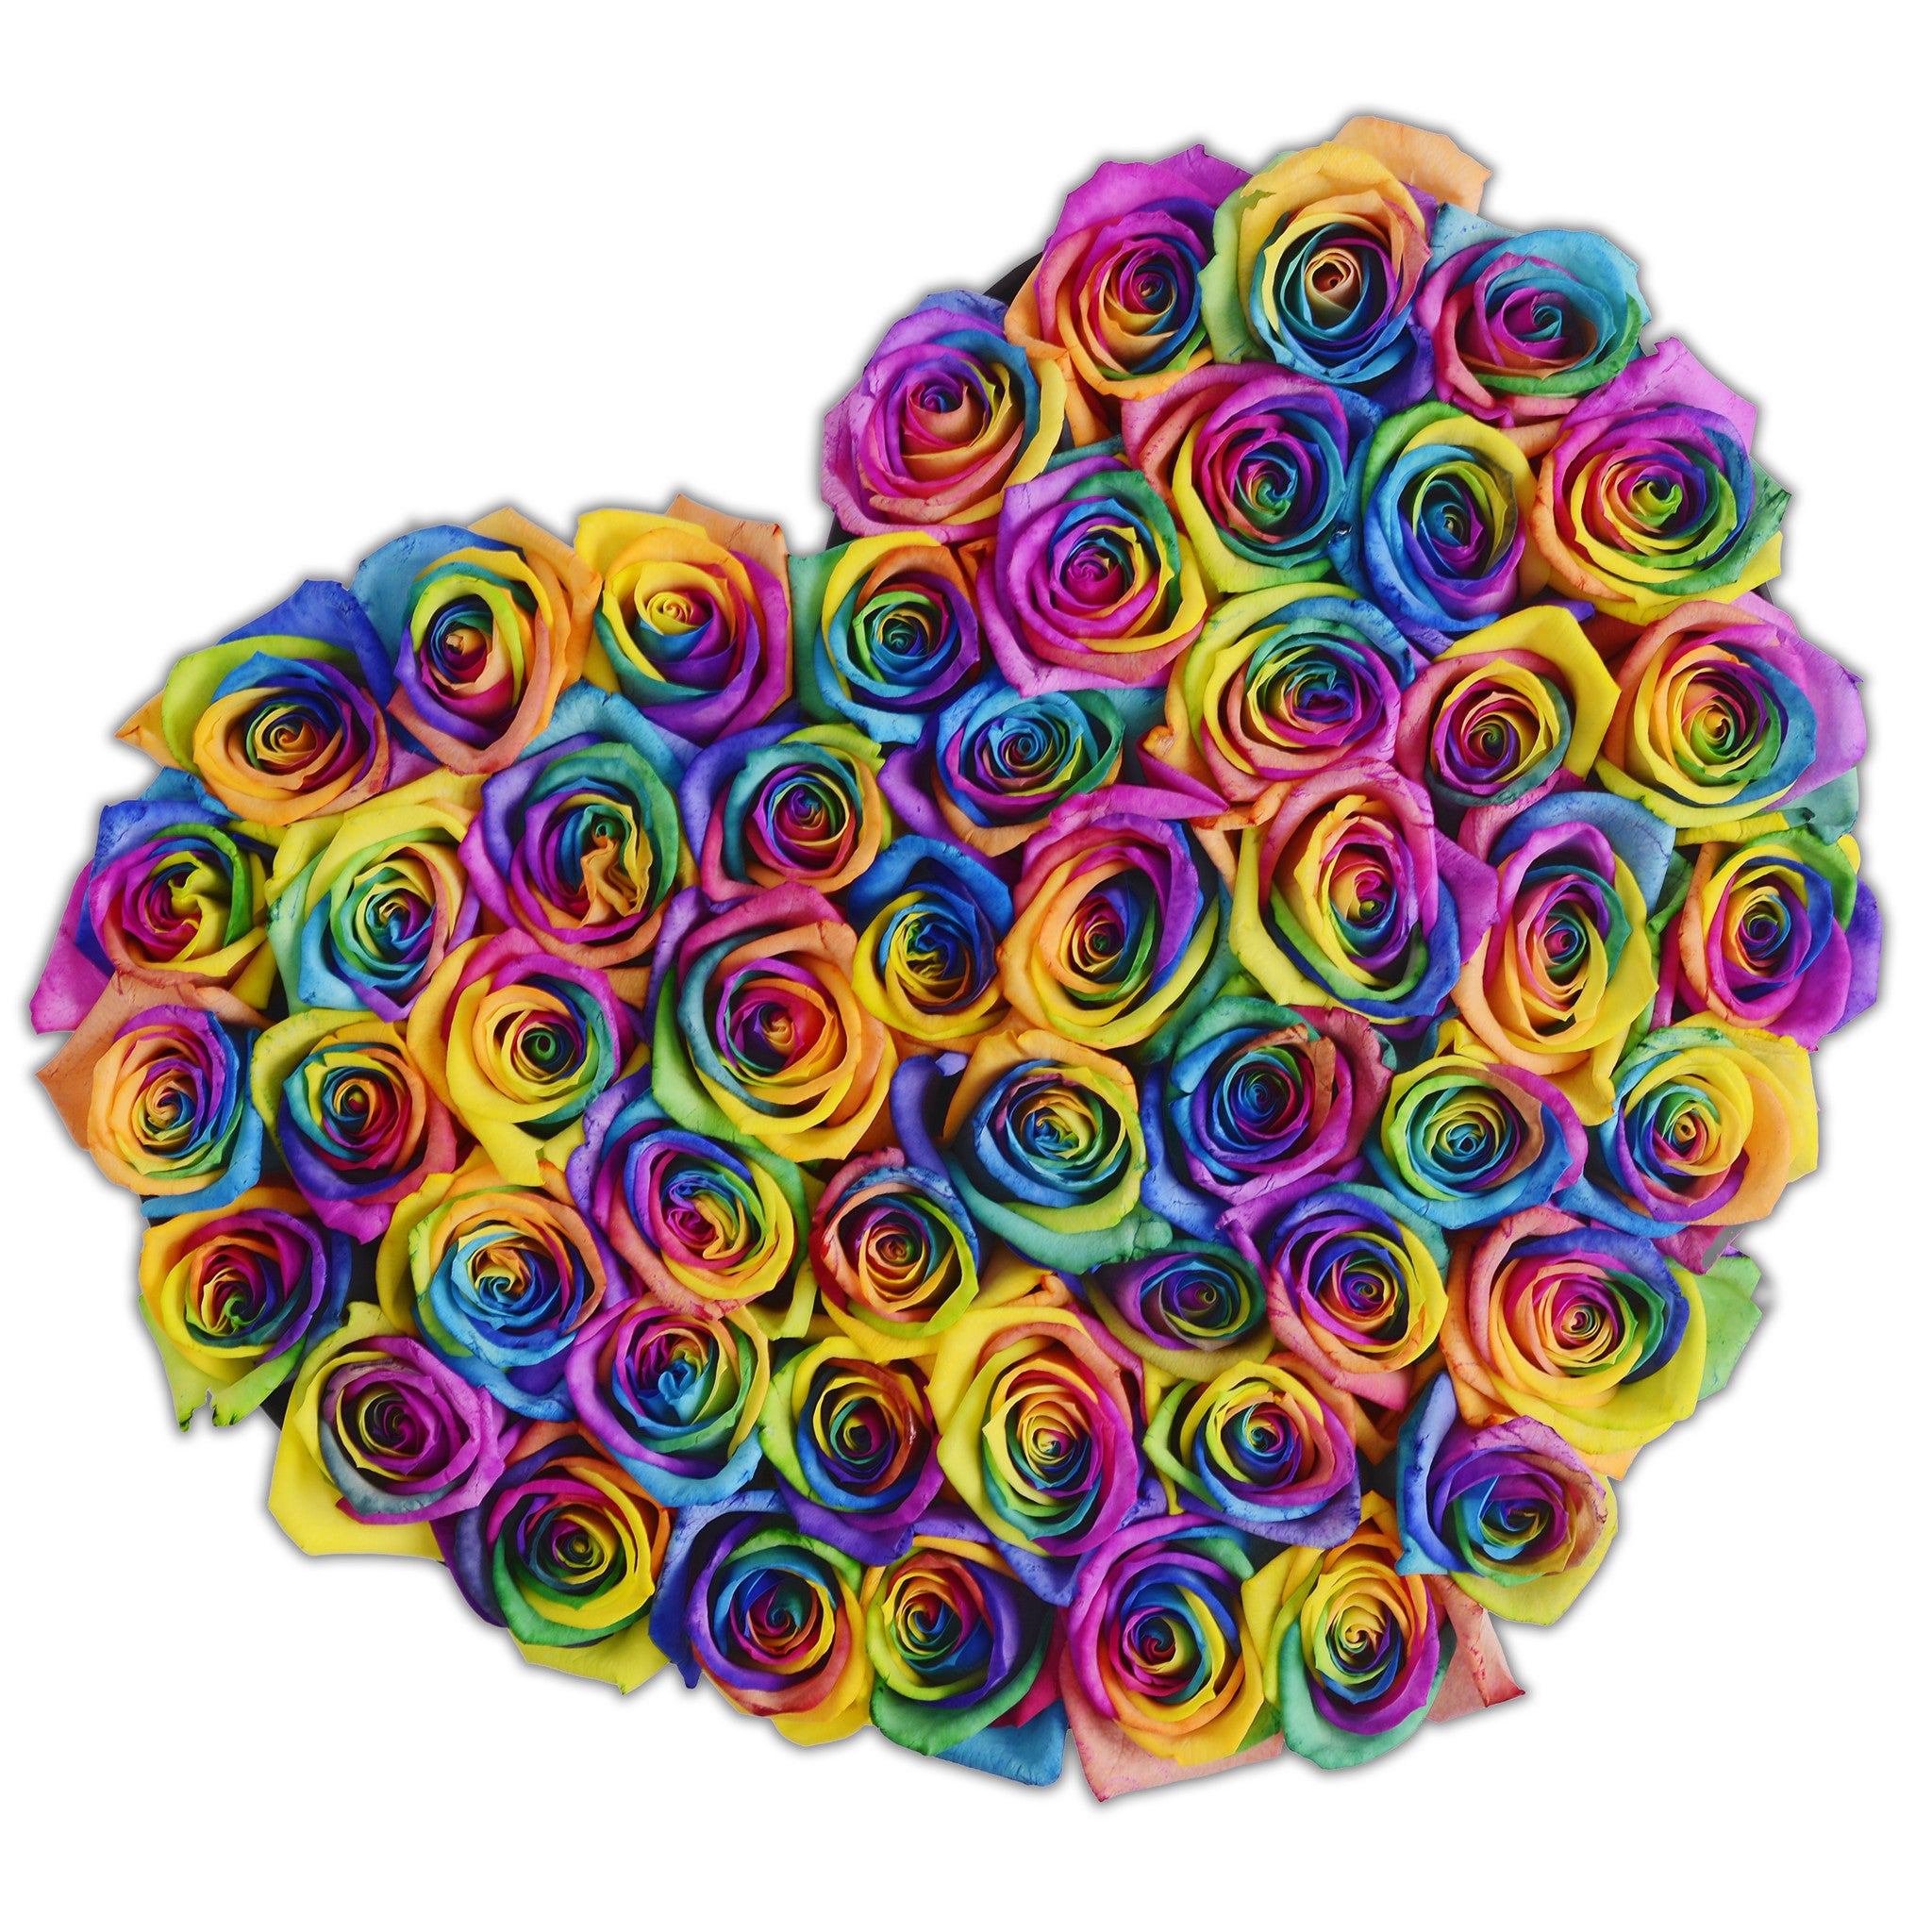 Heart - Rainbow Roses - Black Box - The Million Roses Budapest